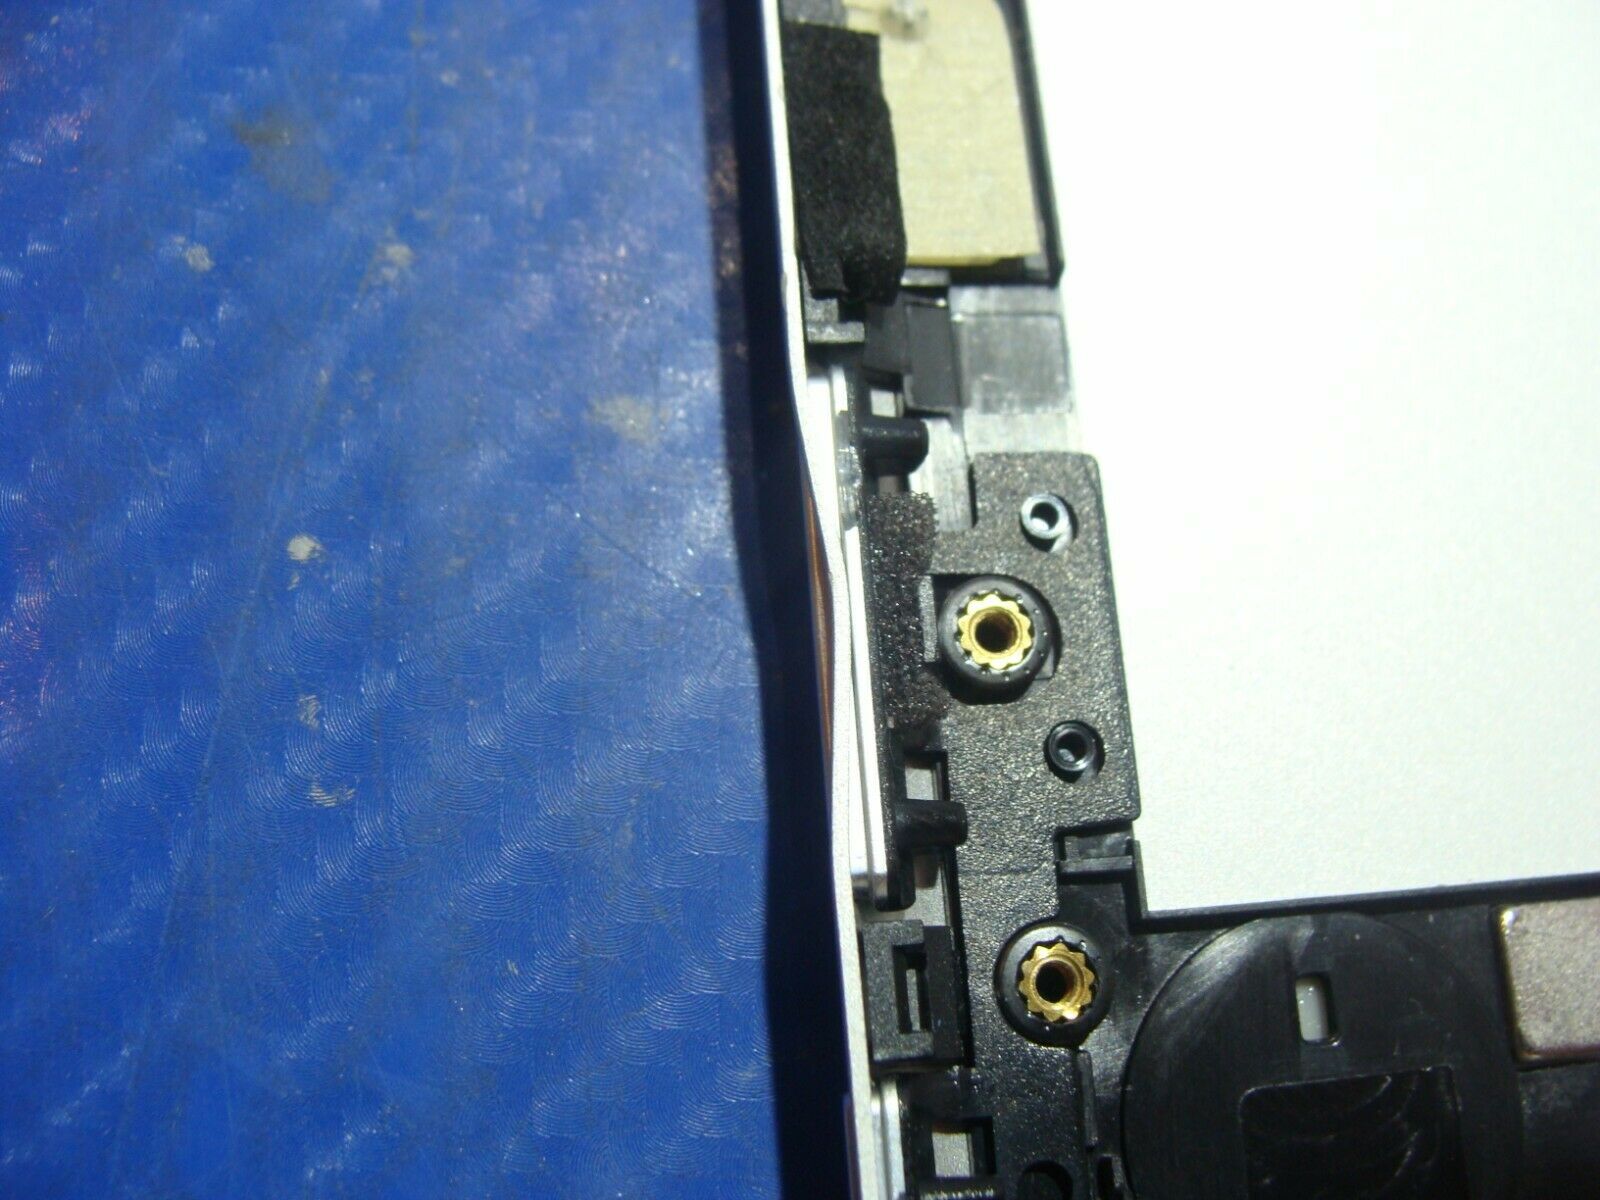 Asus Chromebook Flip C101PA-RRKT10 10.1